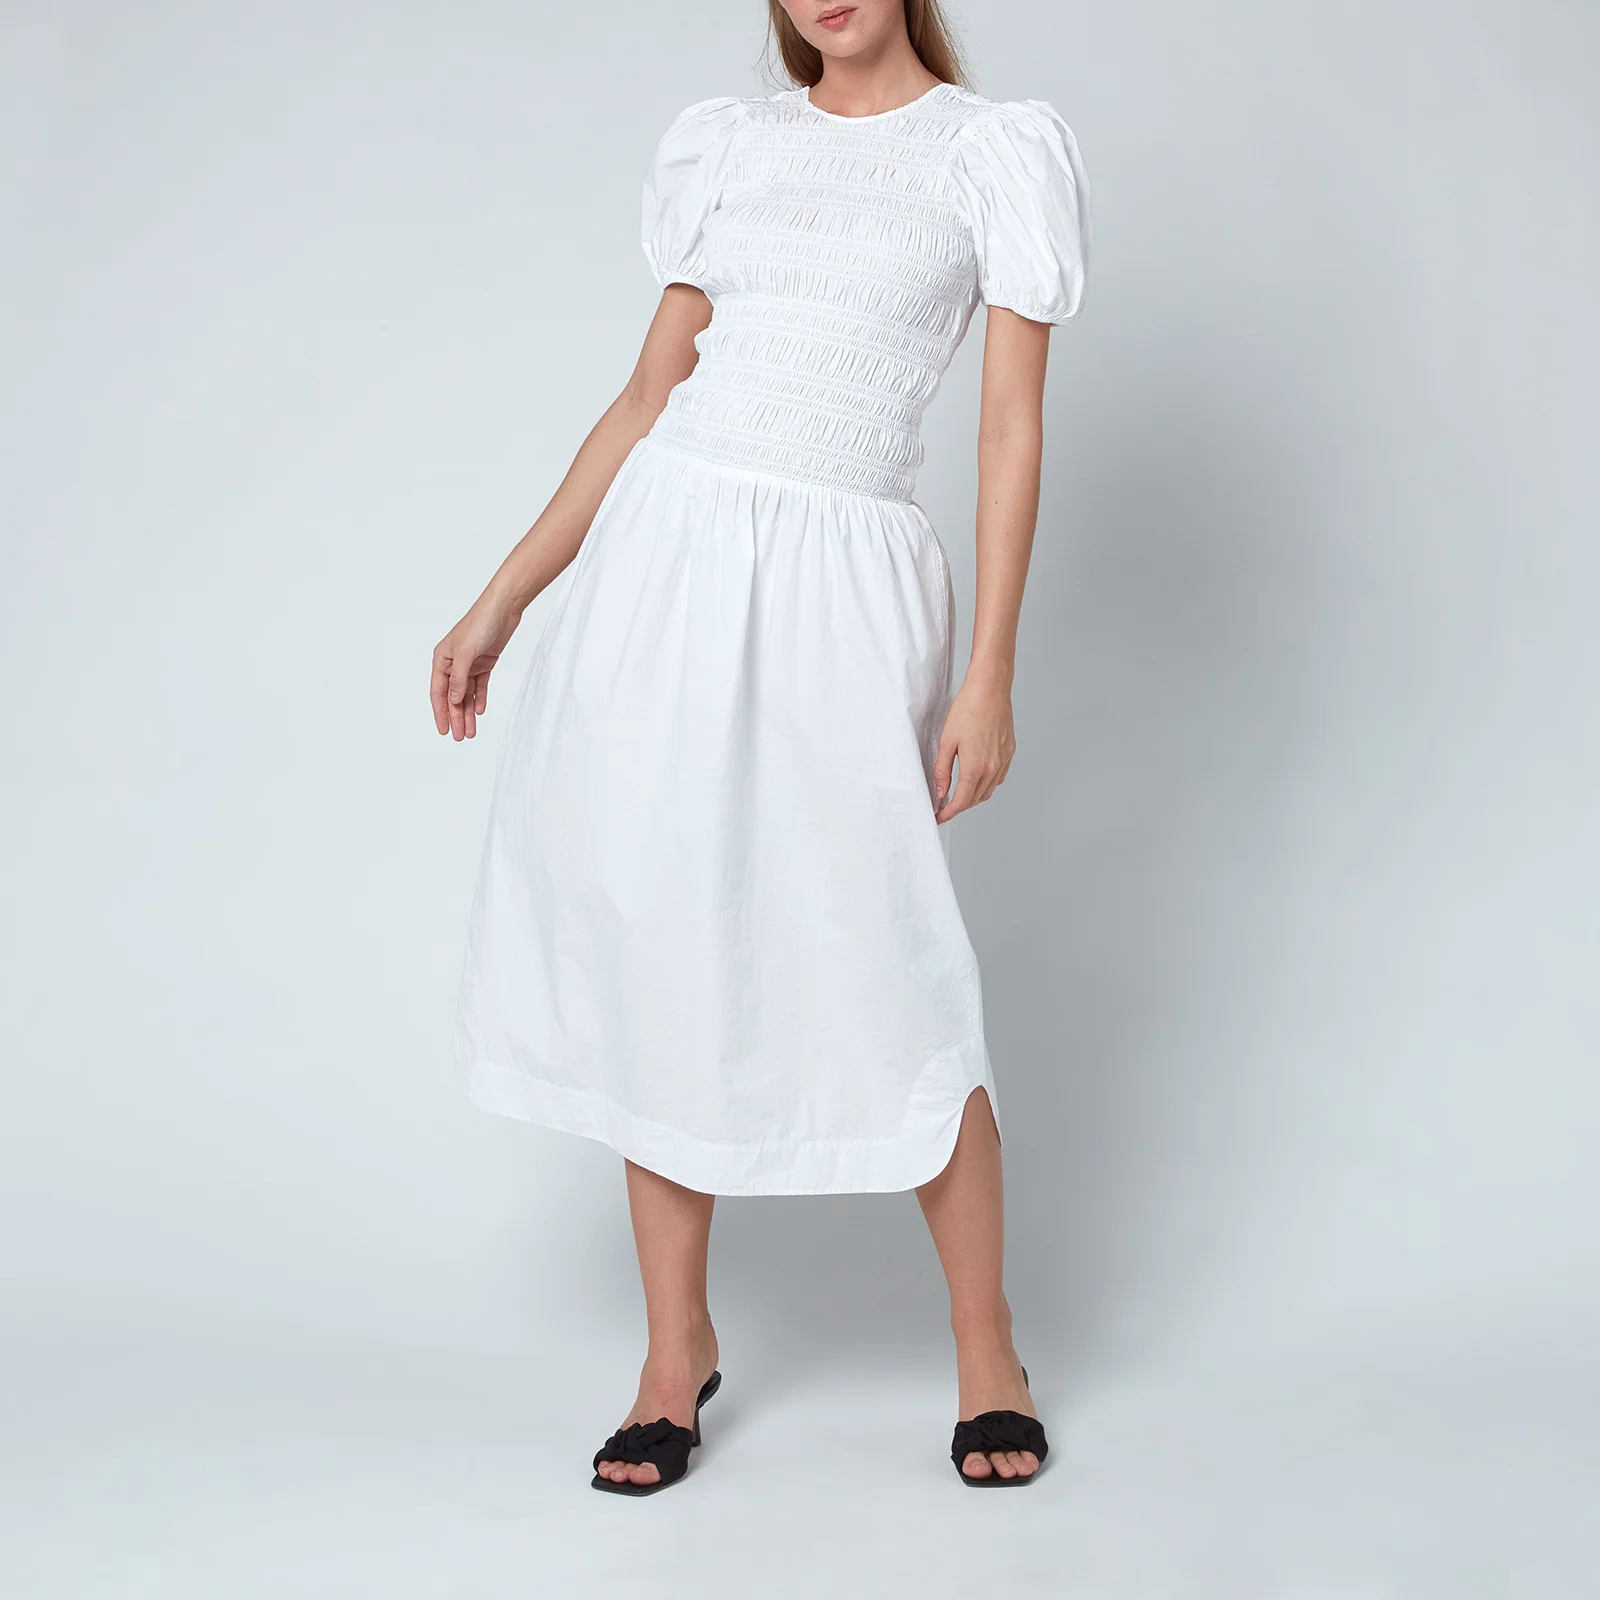 Ganni Women's Cotton Poplin Dress - Bright White Image 1